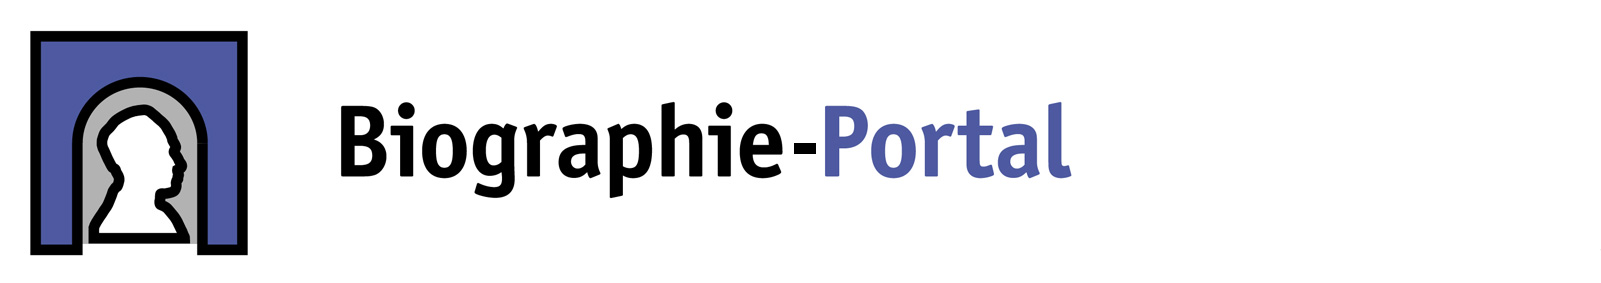 Biographie-Portal - Logo